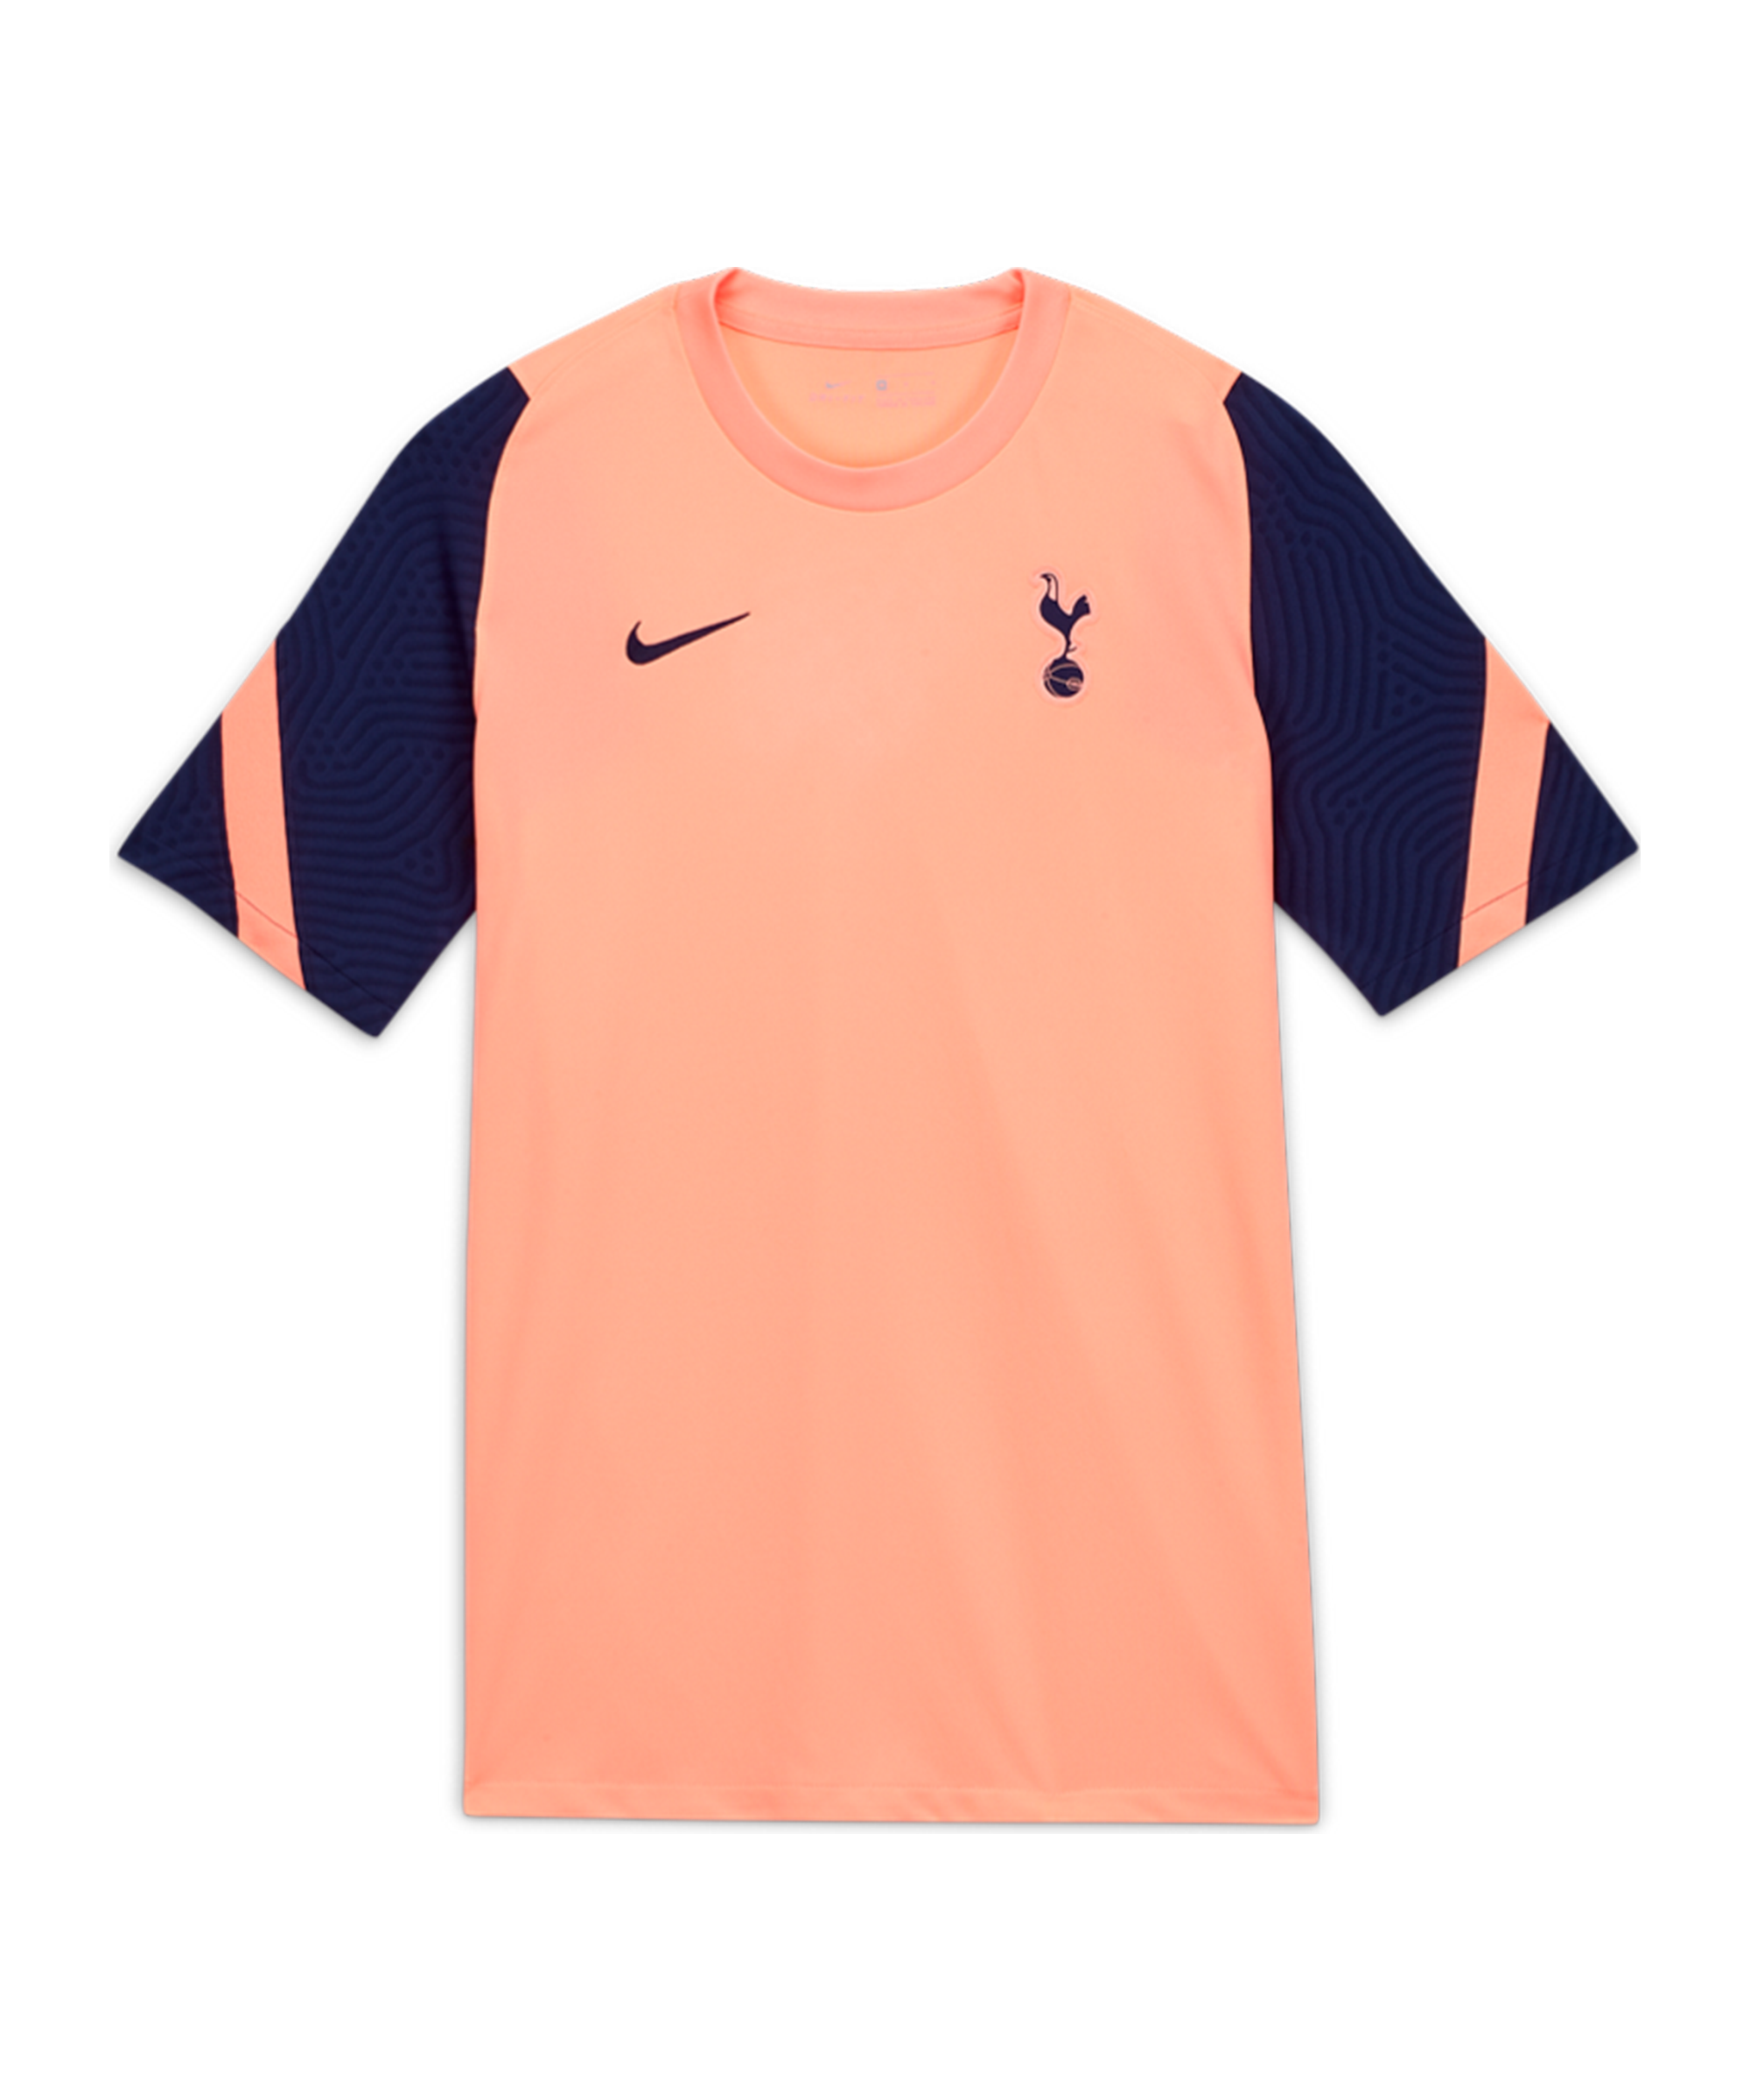 Nike Tottenham Hotspur Strike children's training top